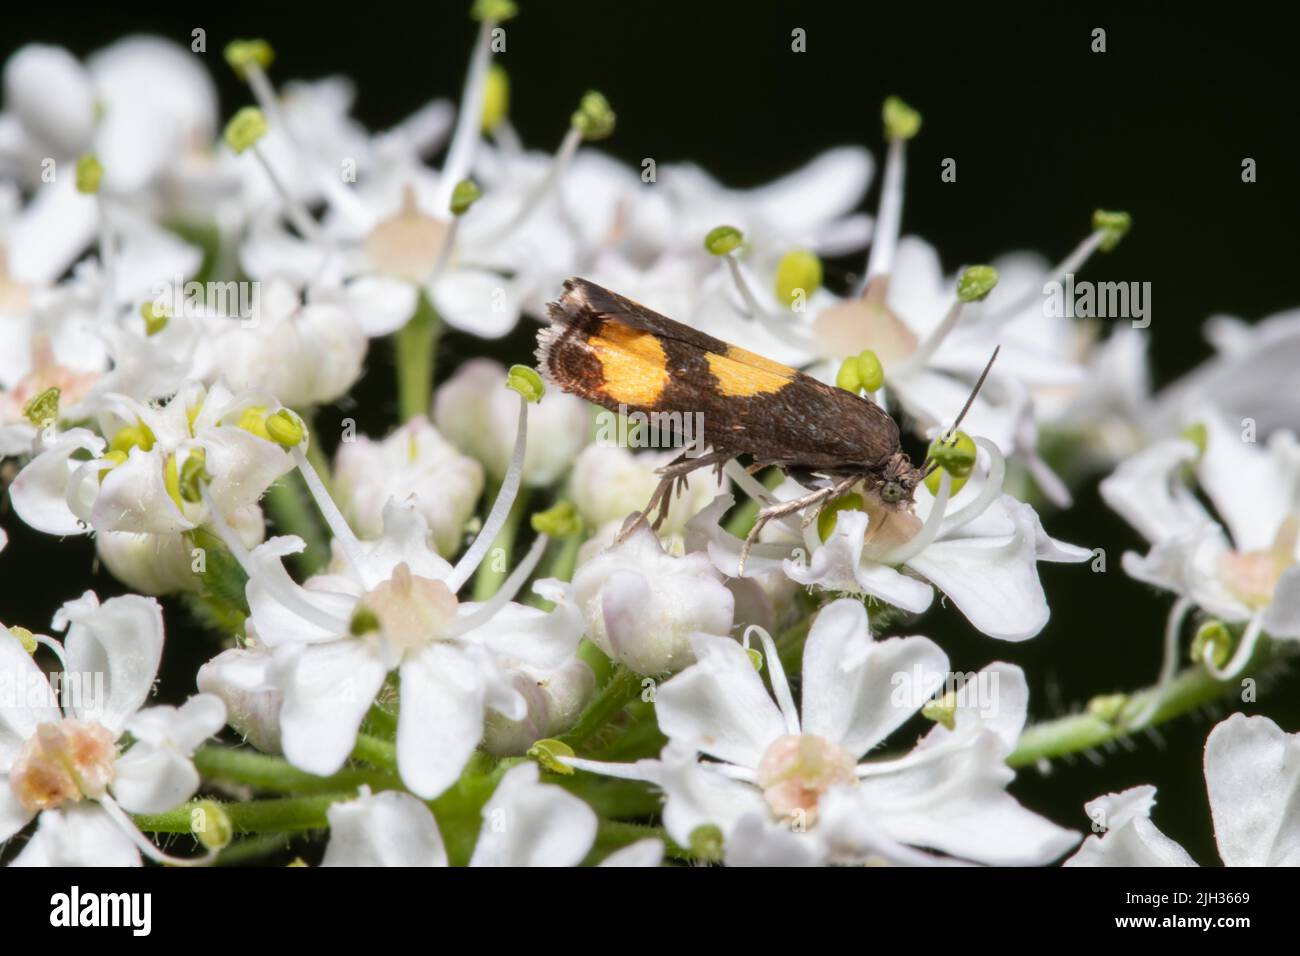 Pammene aurana, known as the Orange-spot Piercer moth, feeding on nectar. Stock Photo